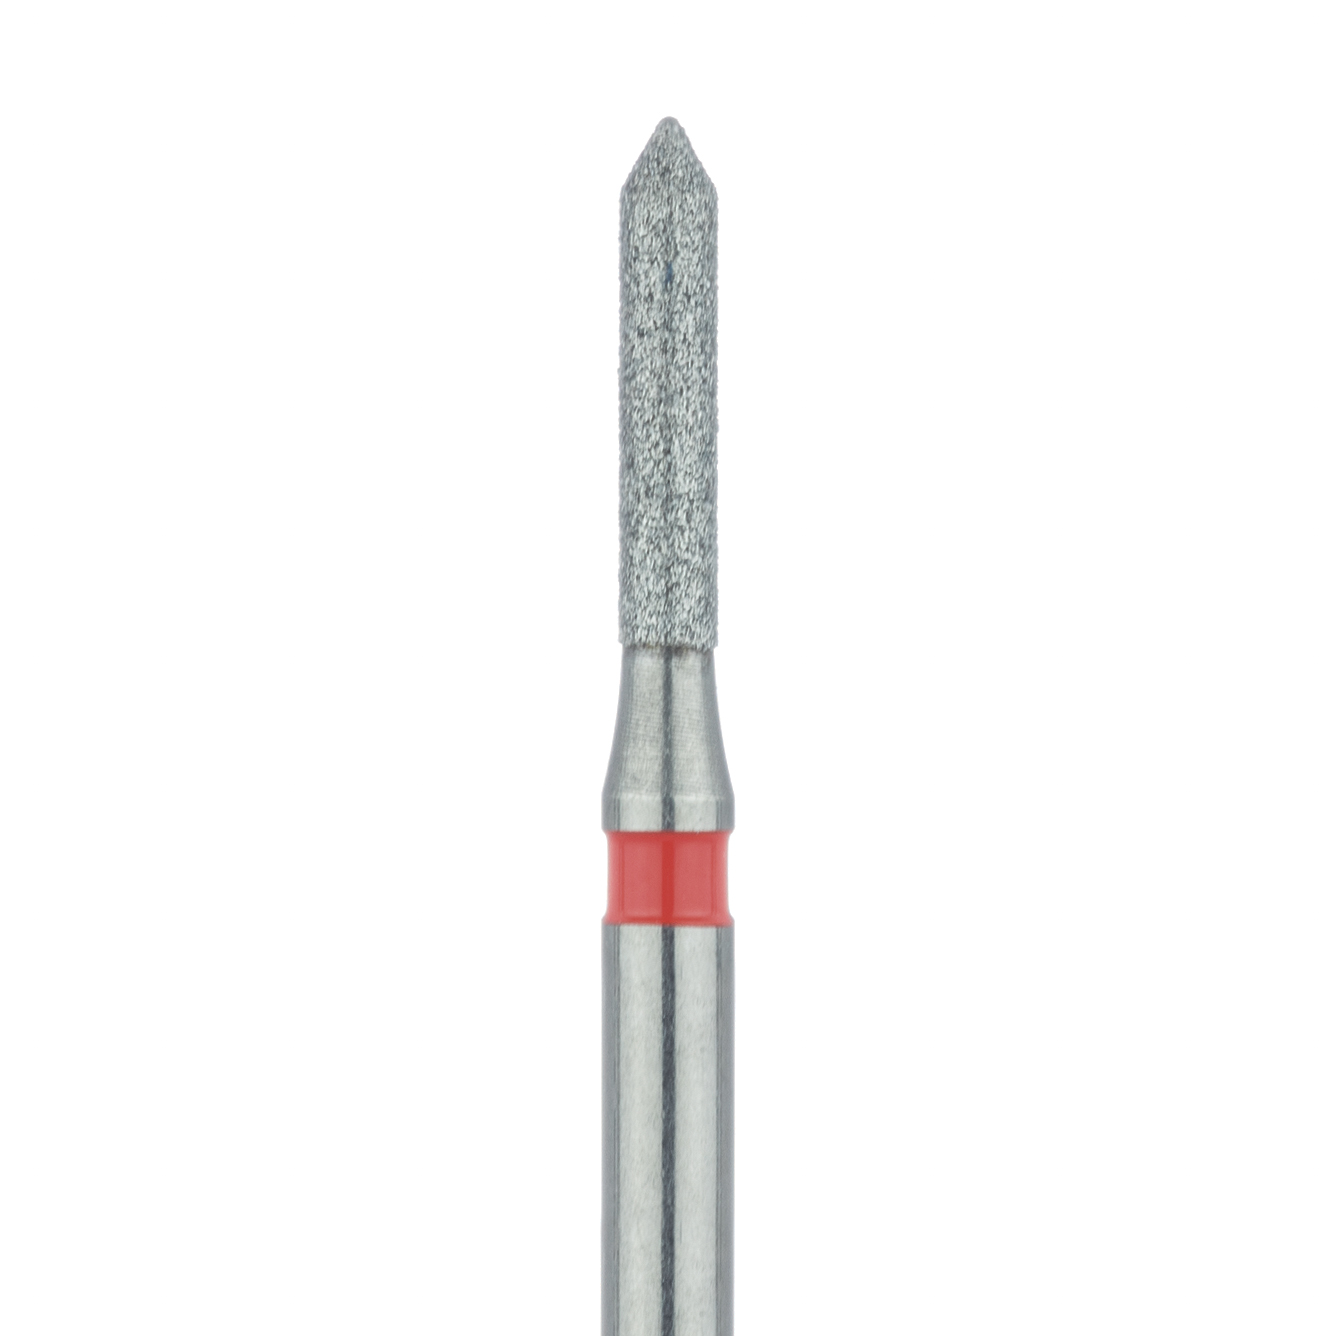 884F-012-FG Pointed Tip Cylinder Diamond Bur, 1.2mm Ø, Fine, FG